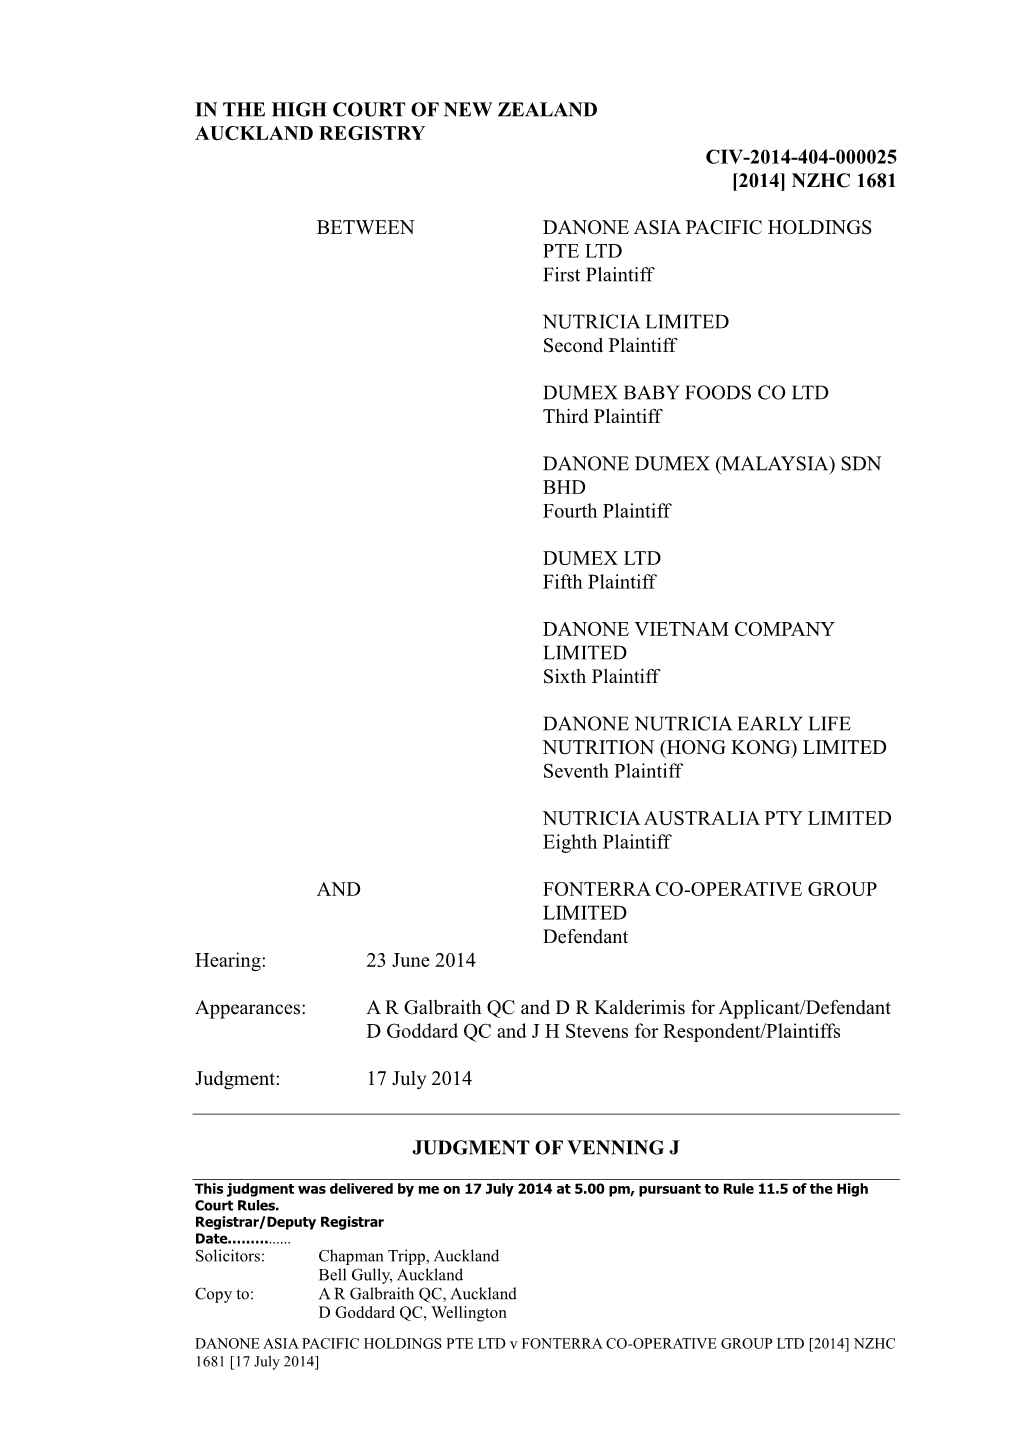 DANONE ASIA PACIFIC HOLDINGS PTE LTD V FONTERRA CO-OPERATIVE GROUP LTD [2014] NZHC 1681 [17 July 2014]